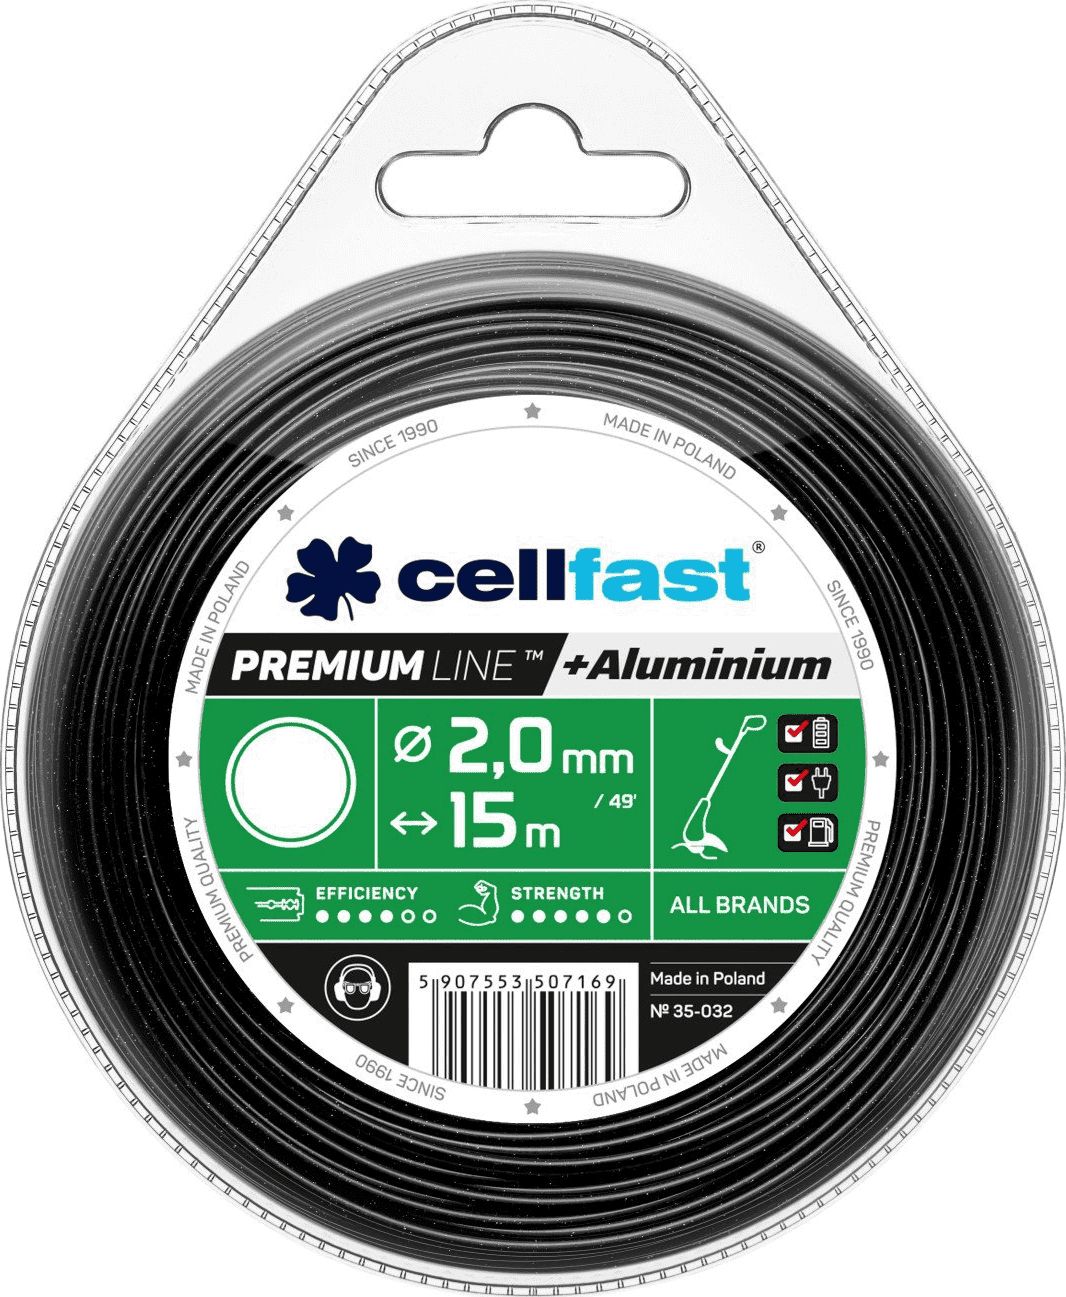 Cellfast zylka tnaca premium 2,0mm / 15m okragla (35-032) 35-032 (5907553507169) Zāles pļāvējs - Trimmeris